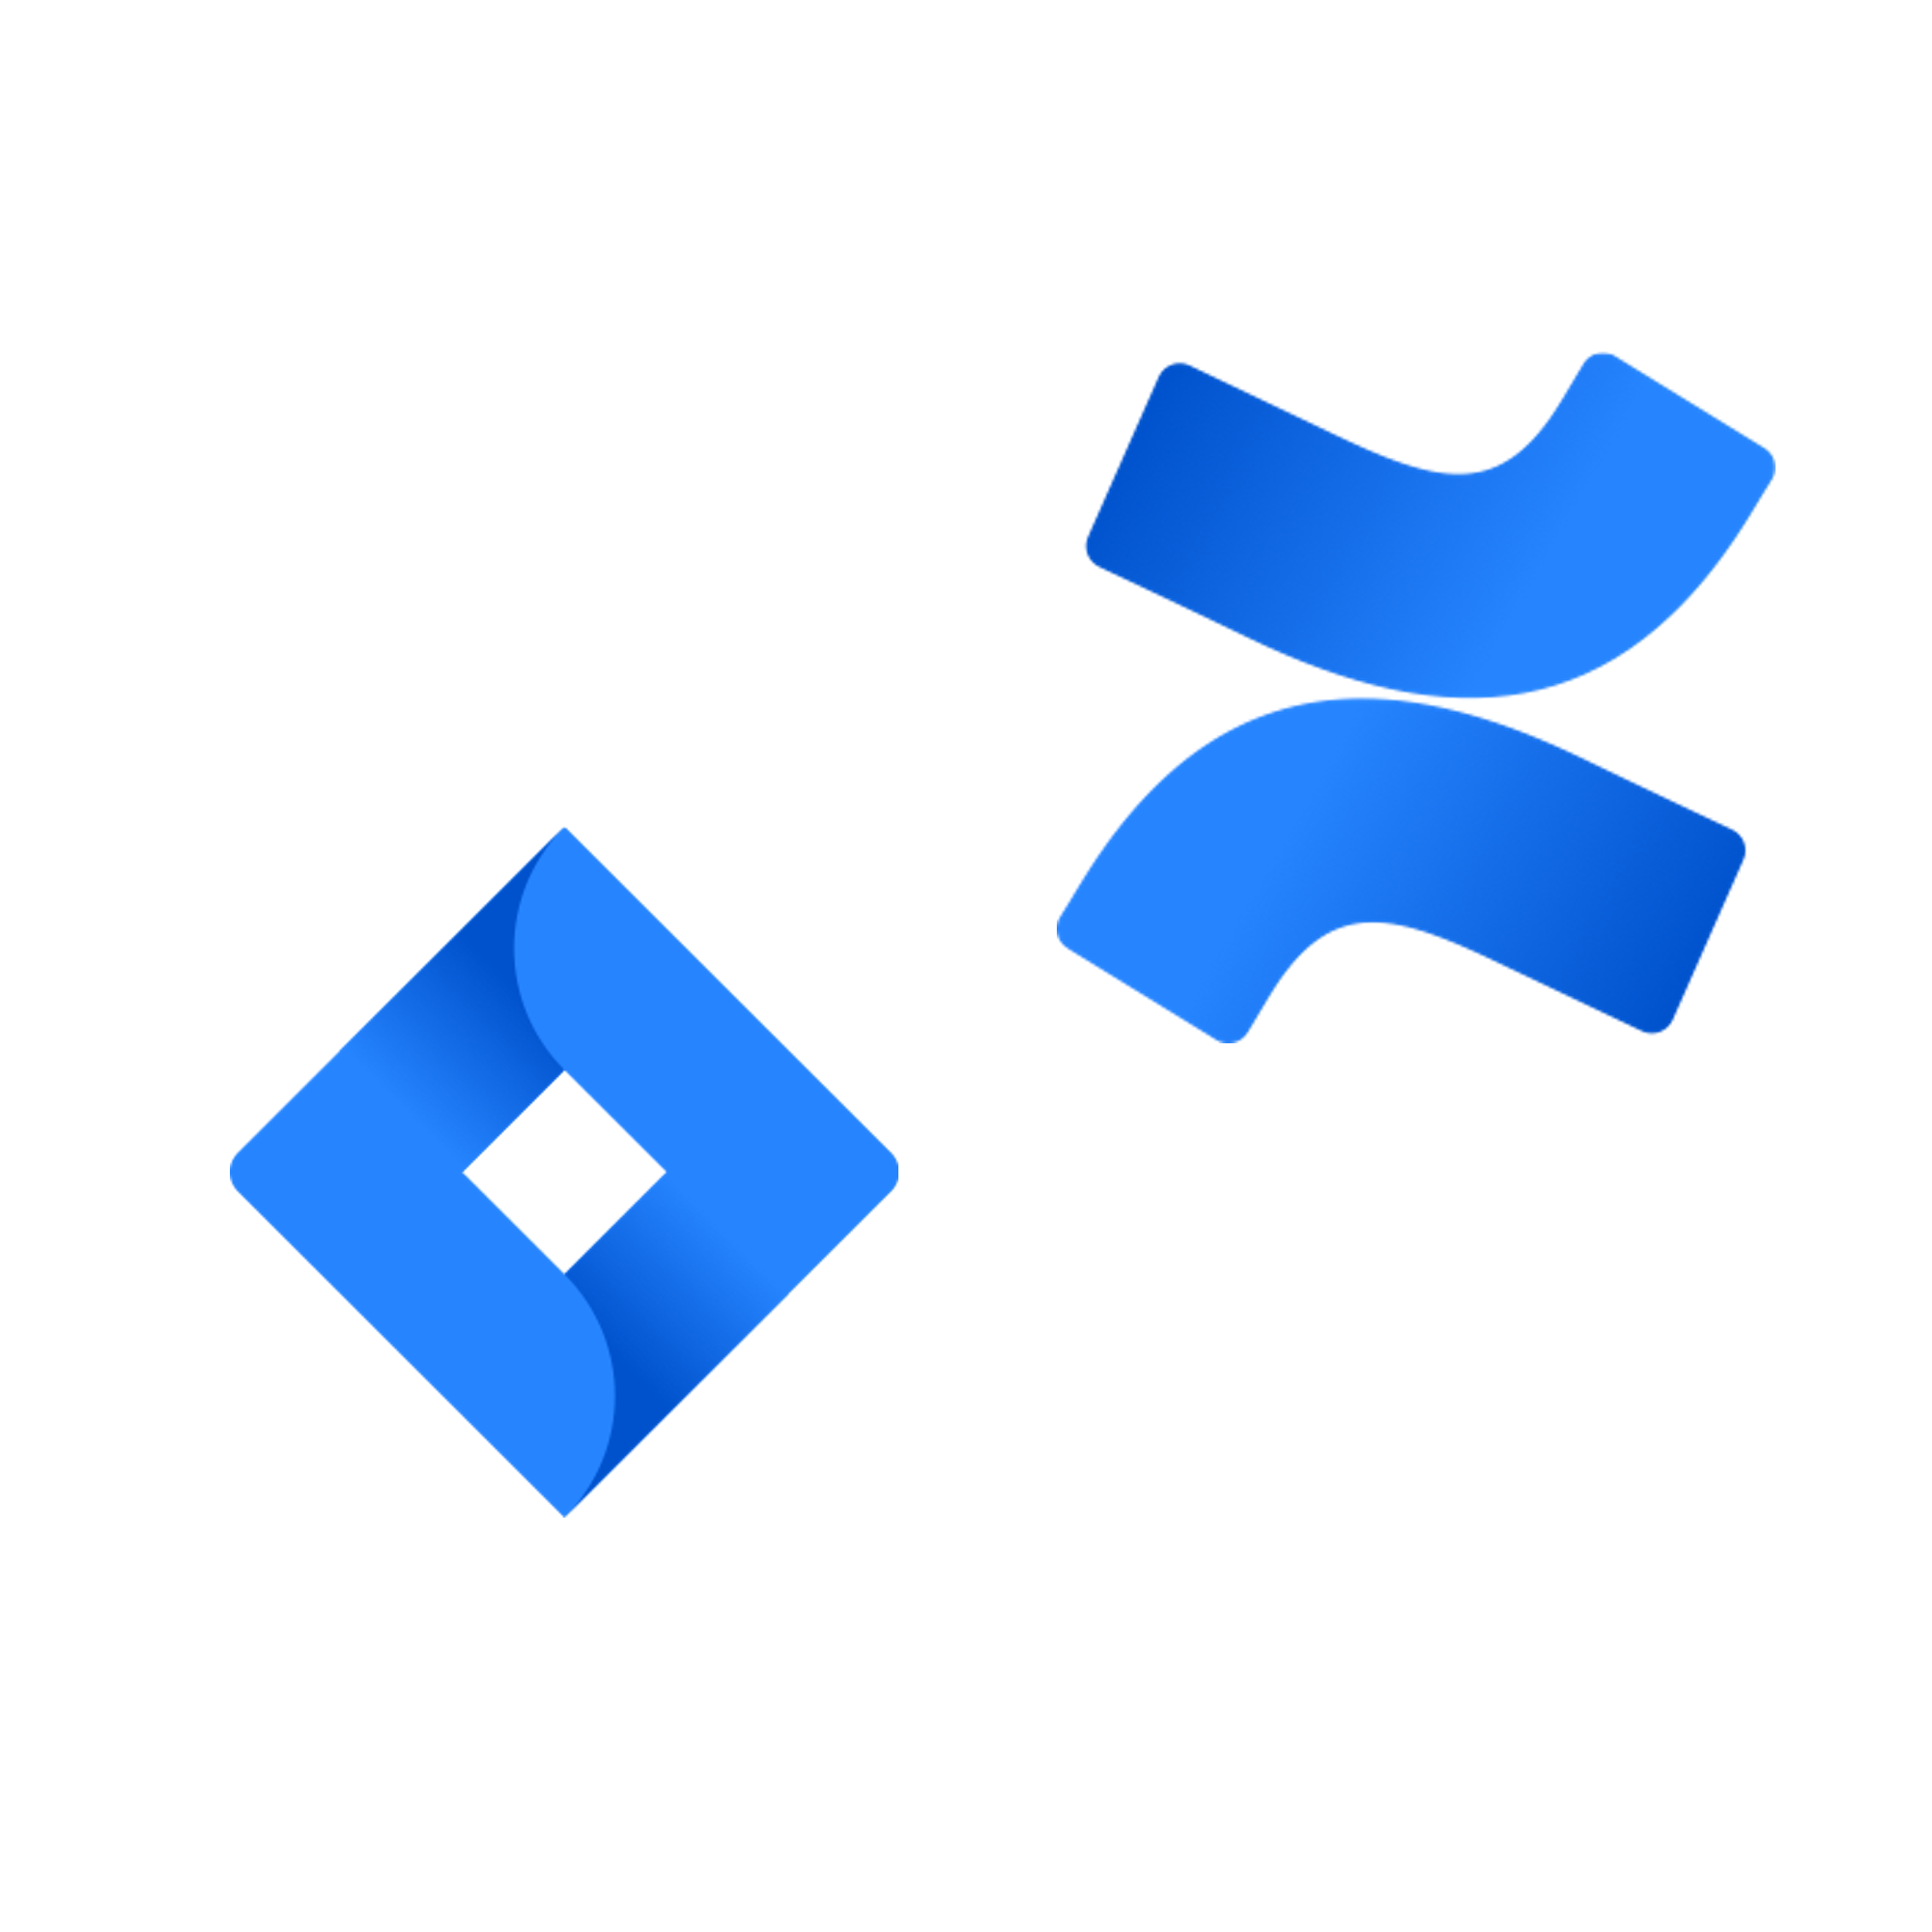 Atlassian Jira and Atlassian Confluence logos